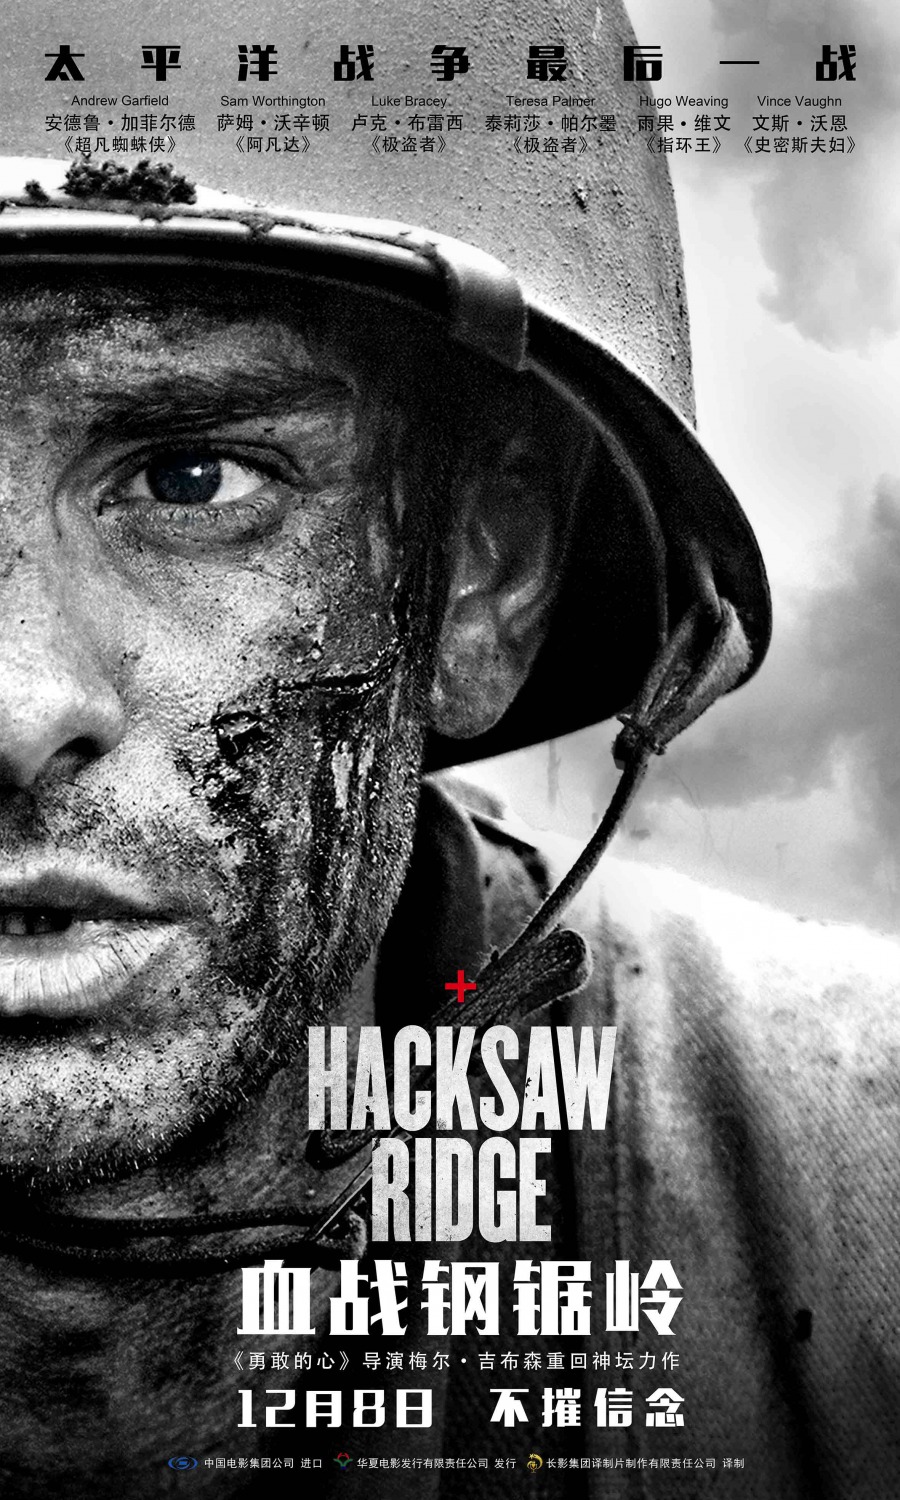 Extra Large Movie Poster Image for Hacksaw Ridge (#12 of 19)